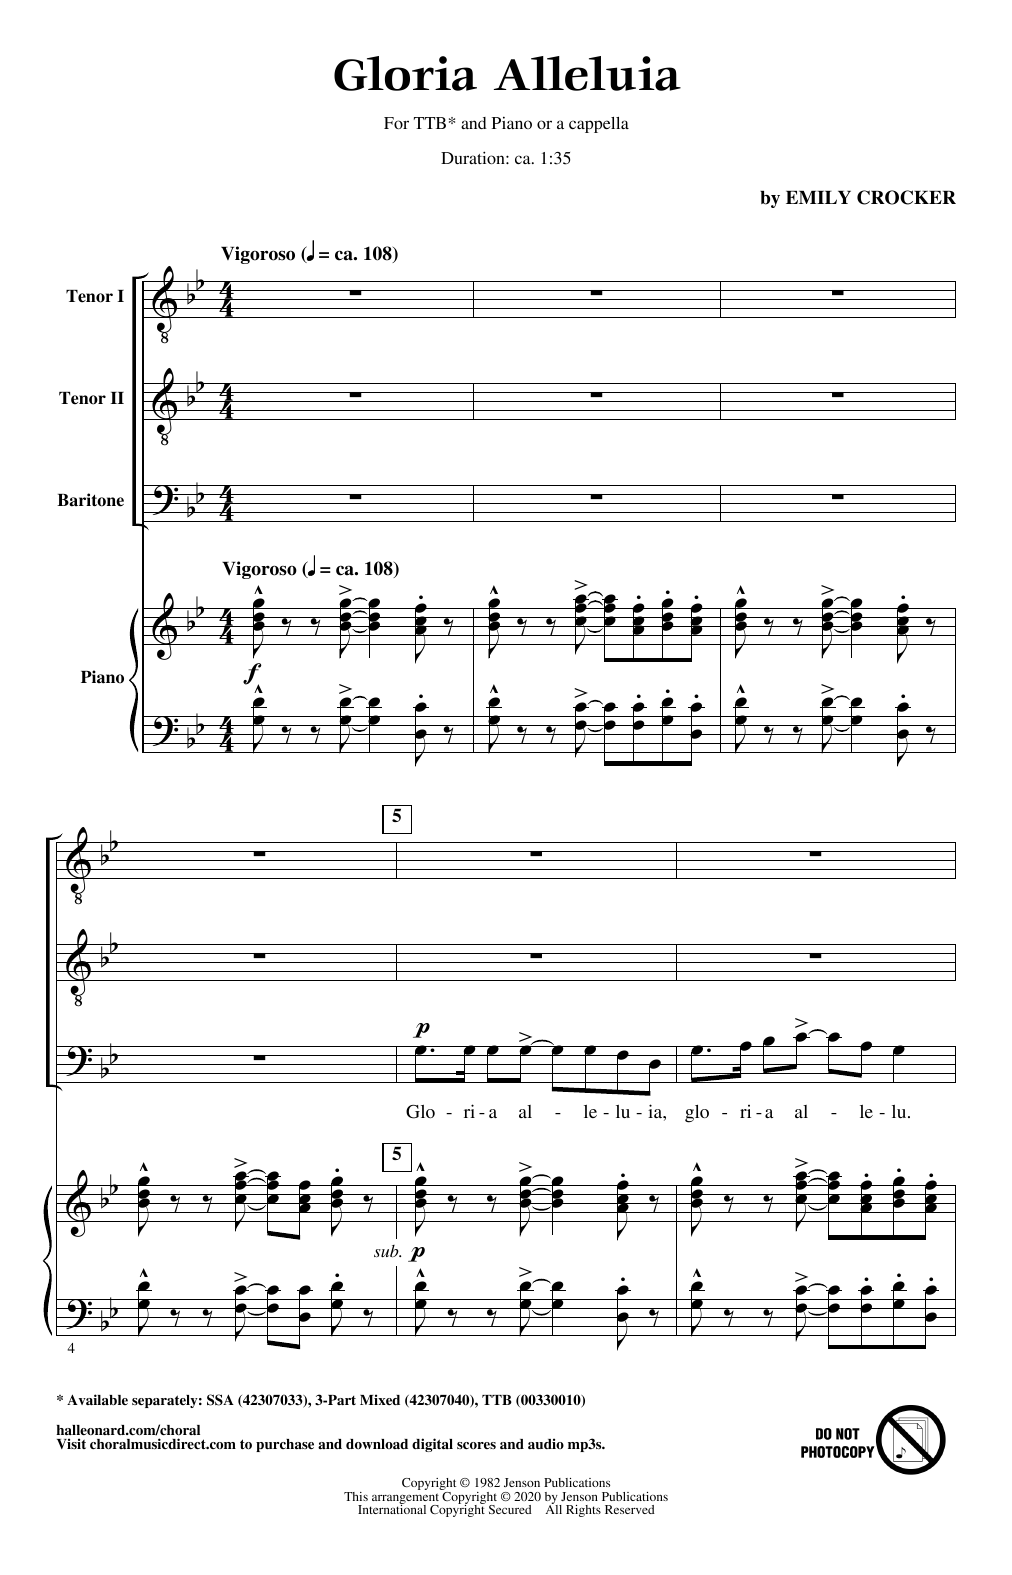 Download Emily Crocker Gloria Alleluia Sheet Music and learn how to play TTBB Choir PDF digital score in minutes